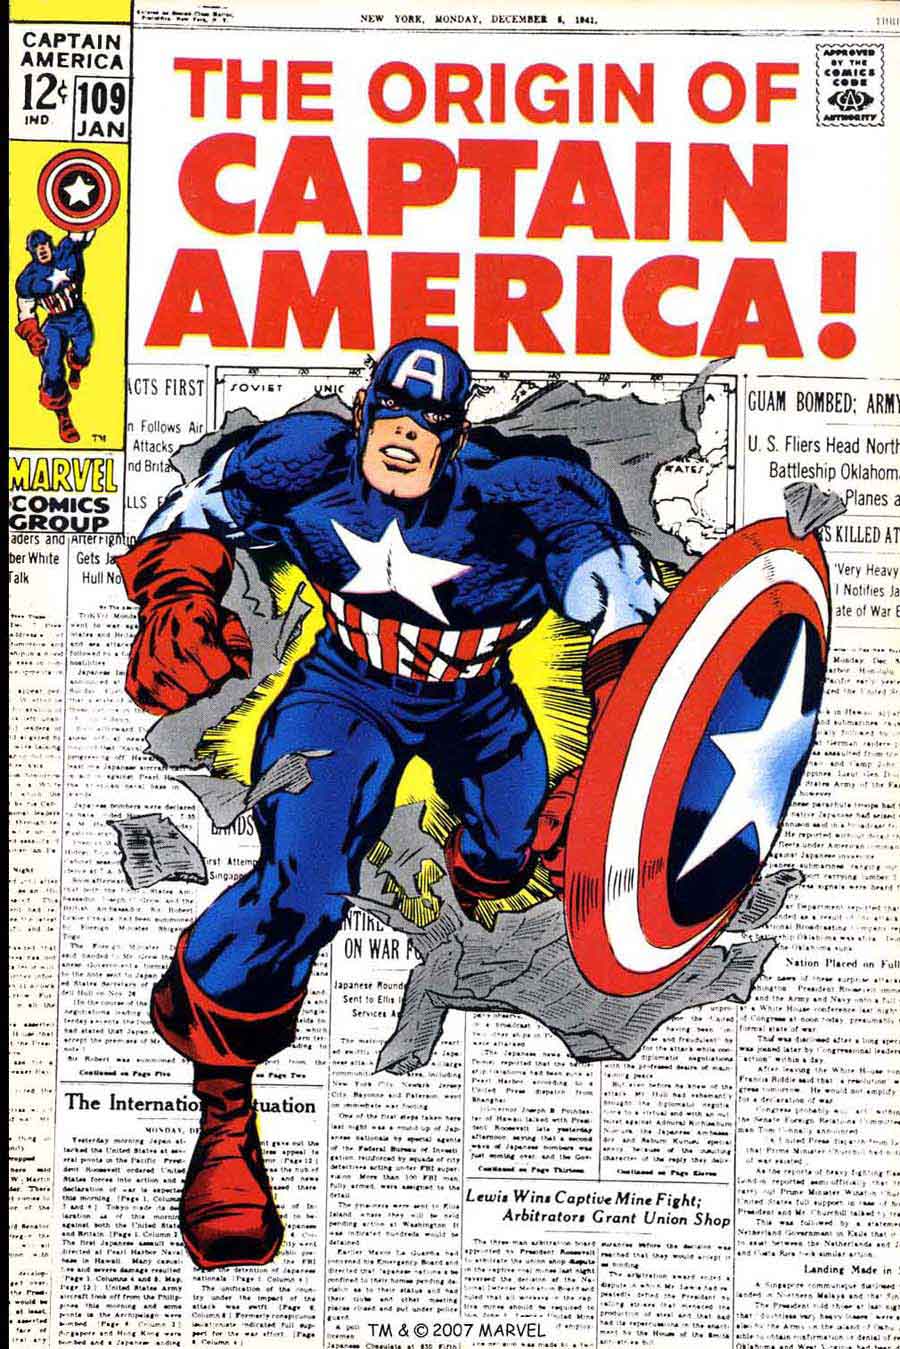 Captain America v1 #10 9marvel comic book cover art by Jack Kirby